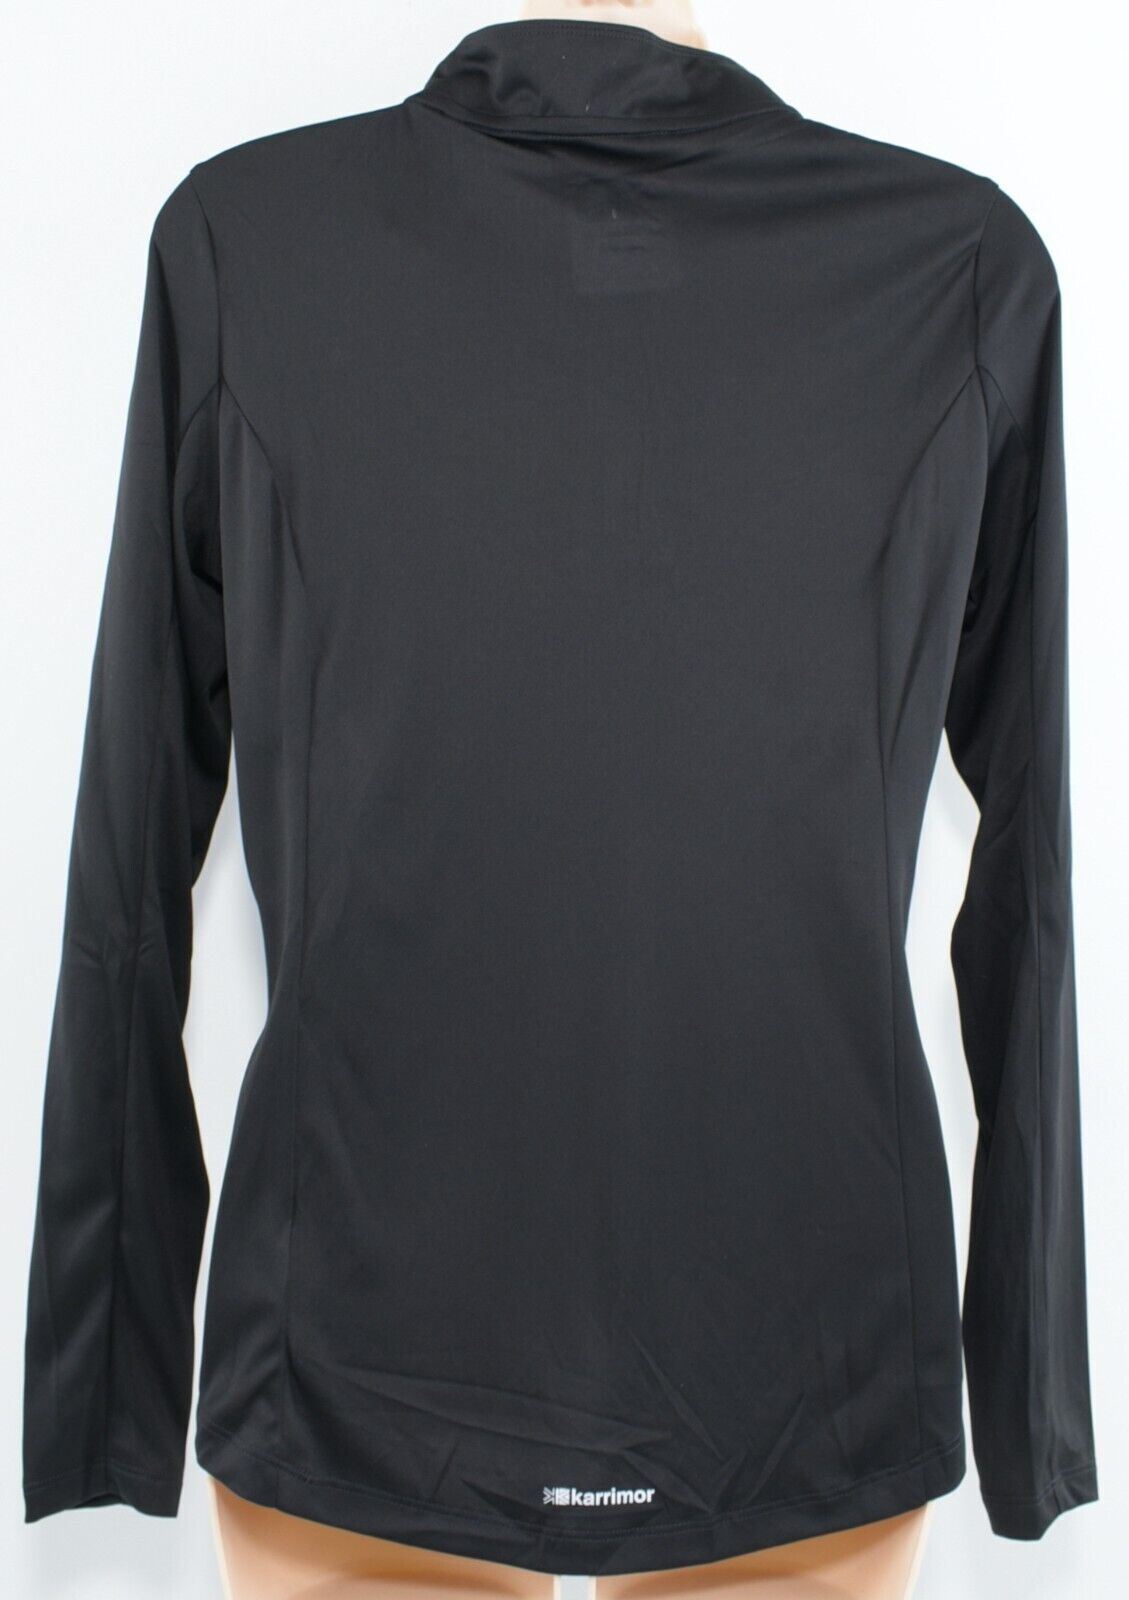 KARRIMOR Womens 1/4 Zip Long Sleeve Running Top, Black, size M /UK 10